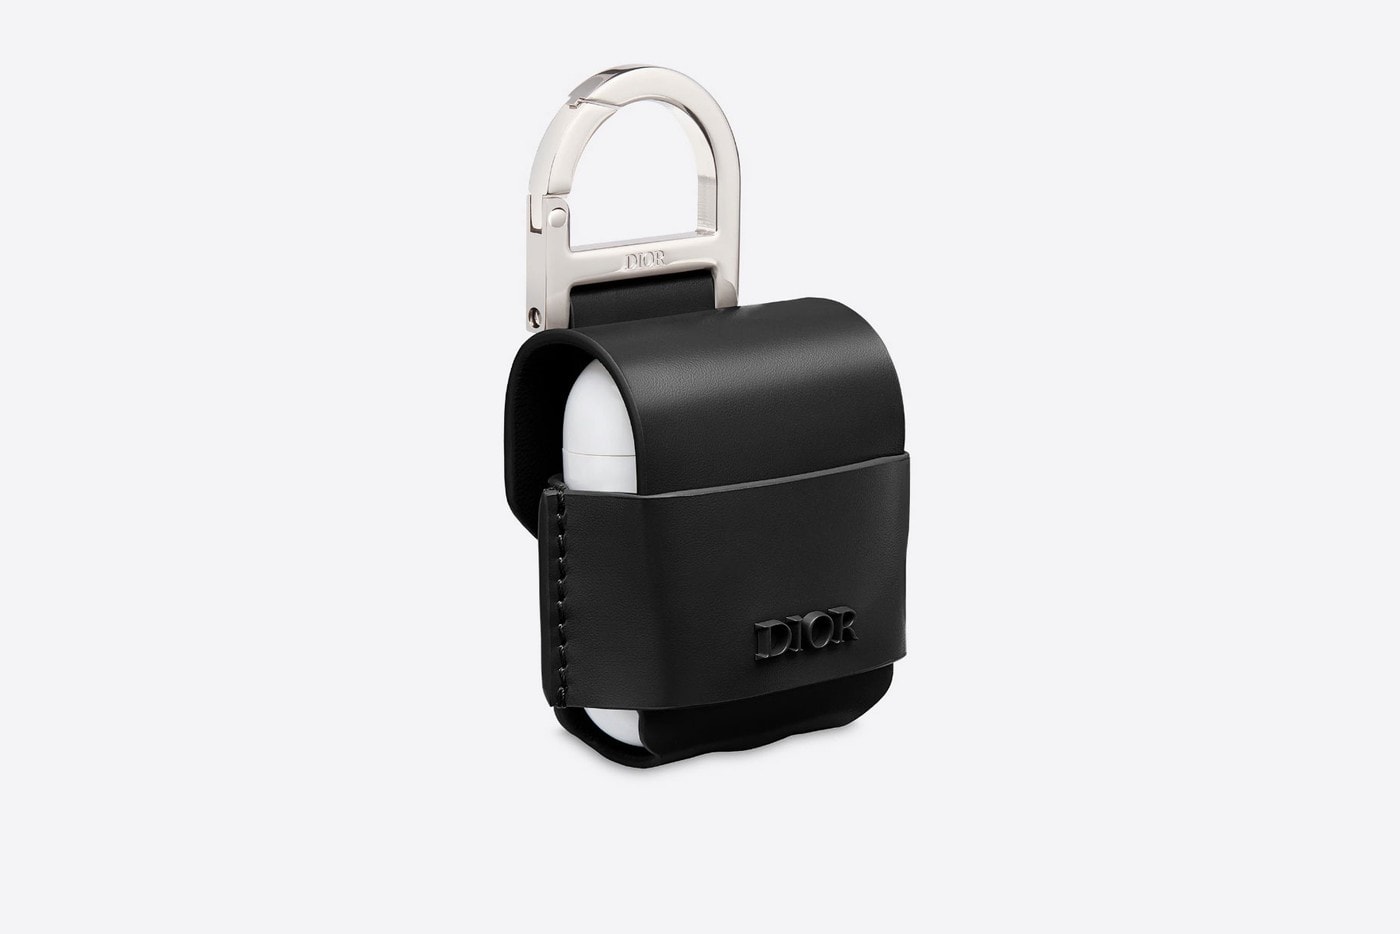 Dior AirPod Case Release Black Grey Leather Logo Branding Music Storage Luxury Accessory Fashion Detail